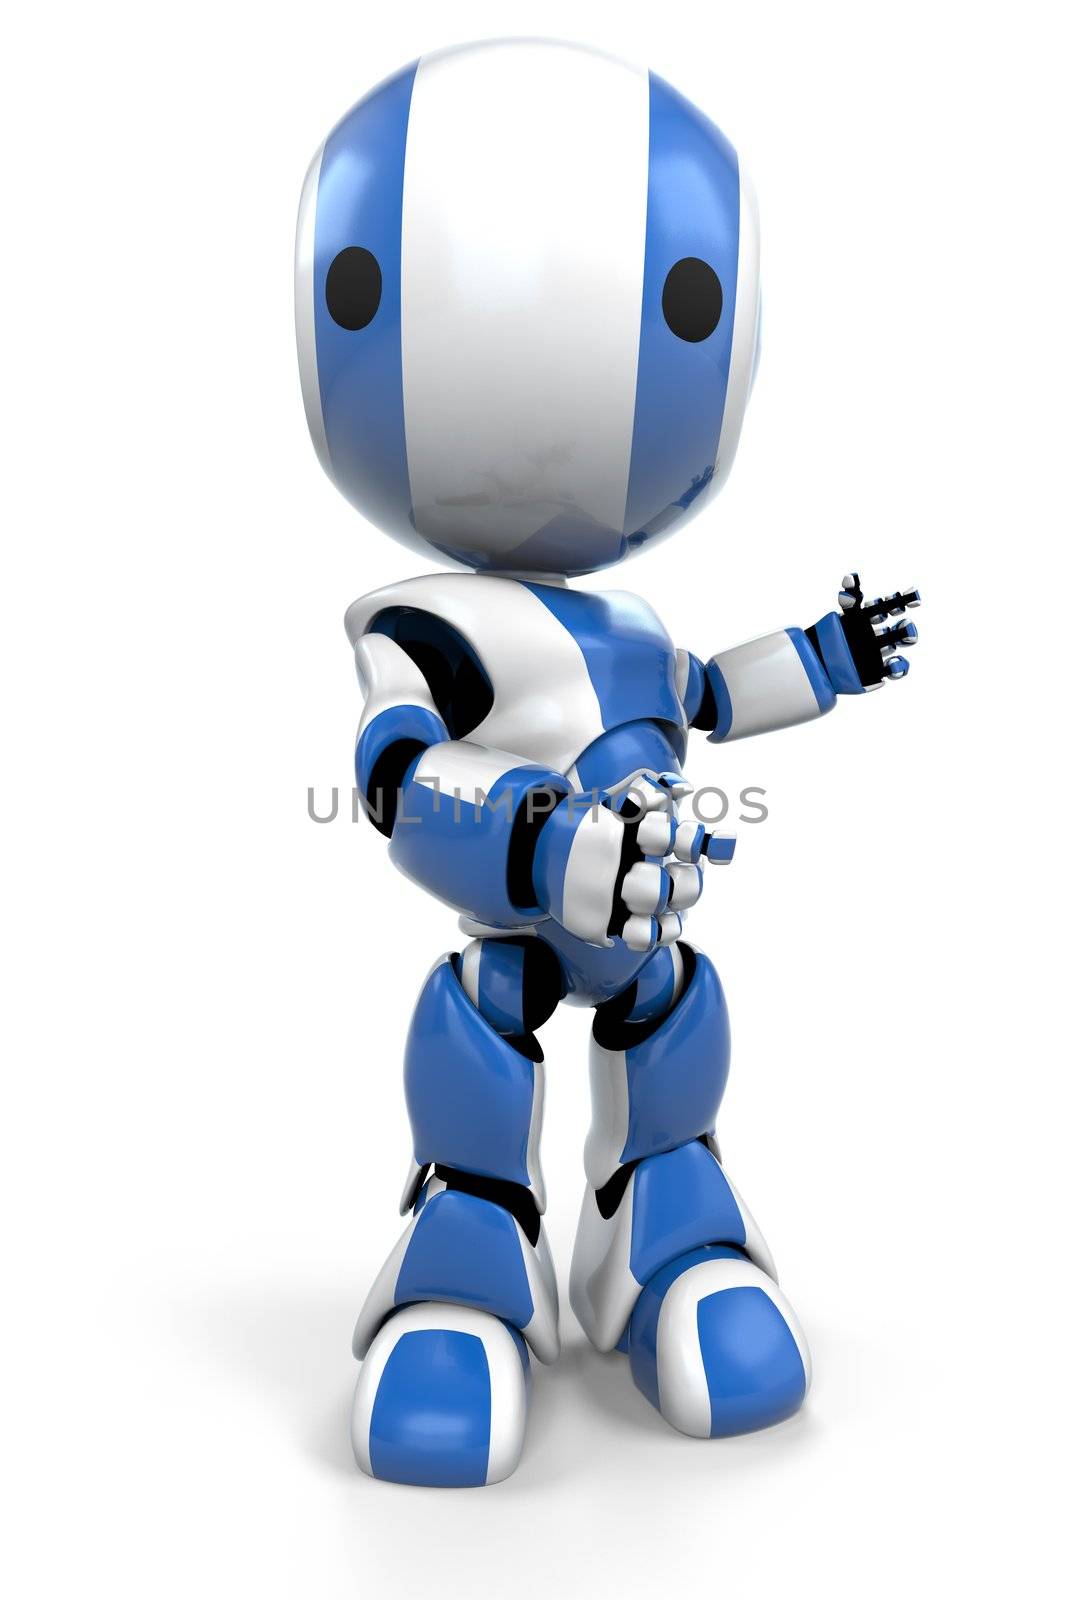 Blue Robot Presenting by LeoBlanchette